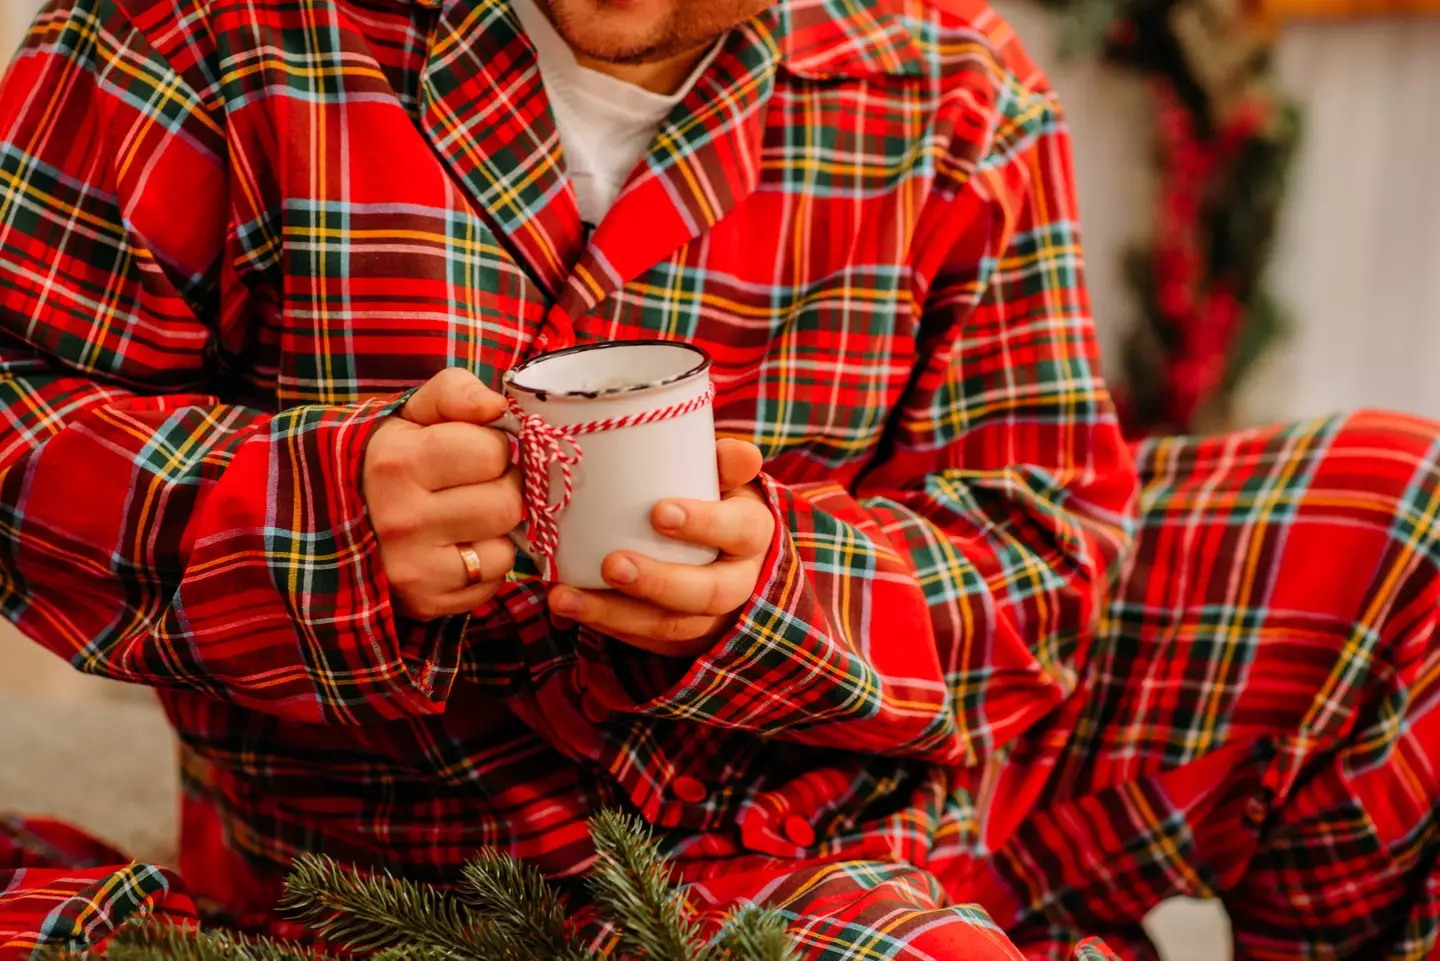 Matching Christmas pyjamas are a no-no this year.